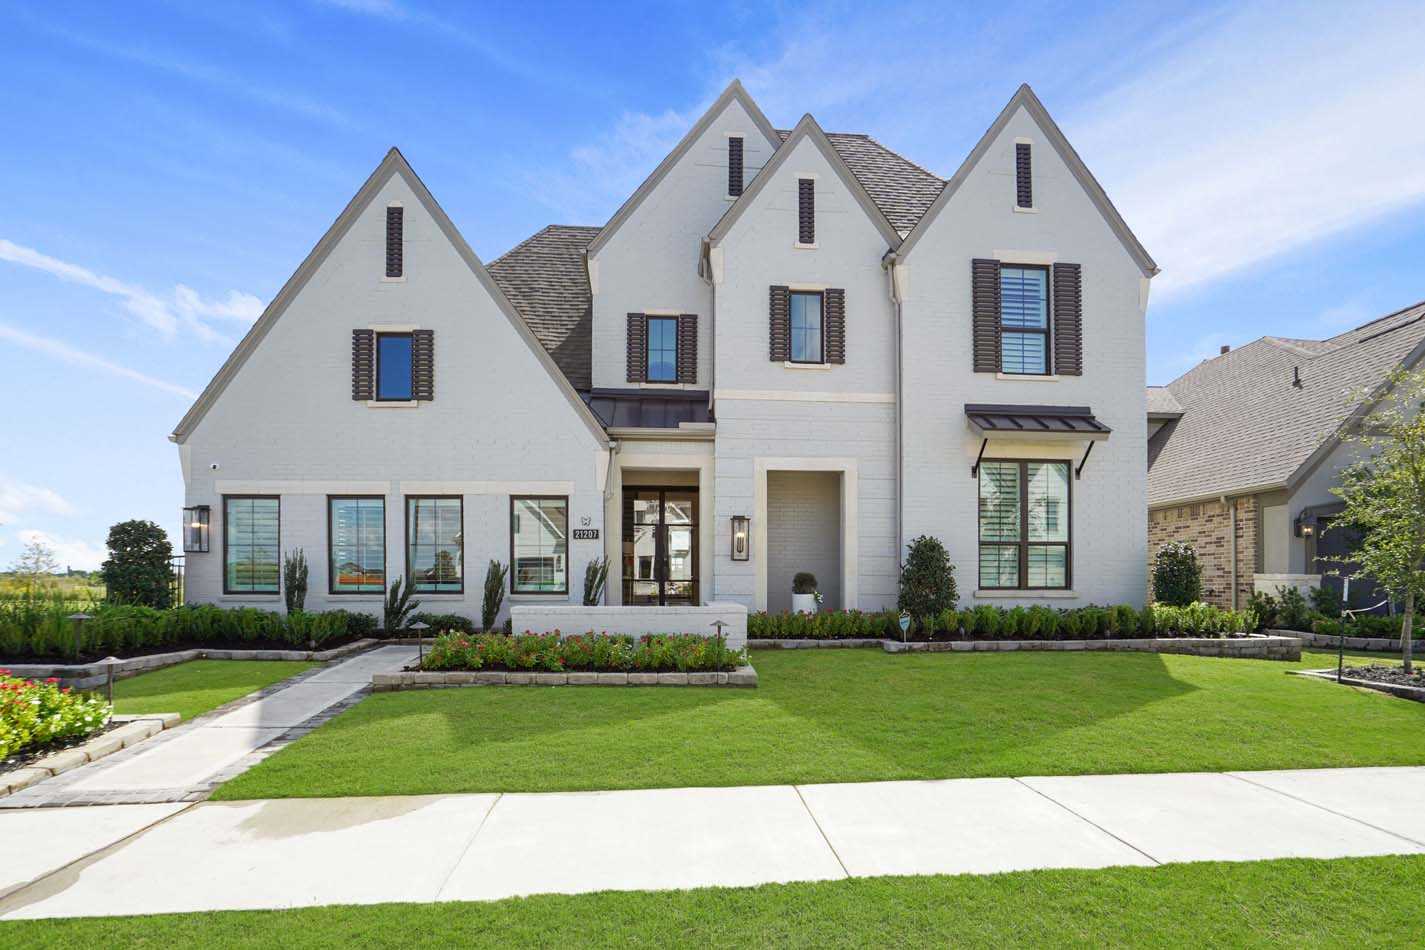 New Homes in Bridgeland: 65ft. lots - Home Builder in Cypress TX